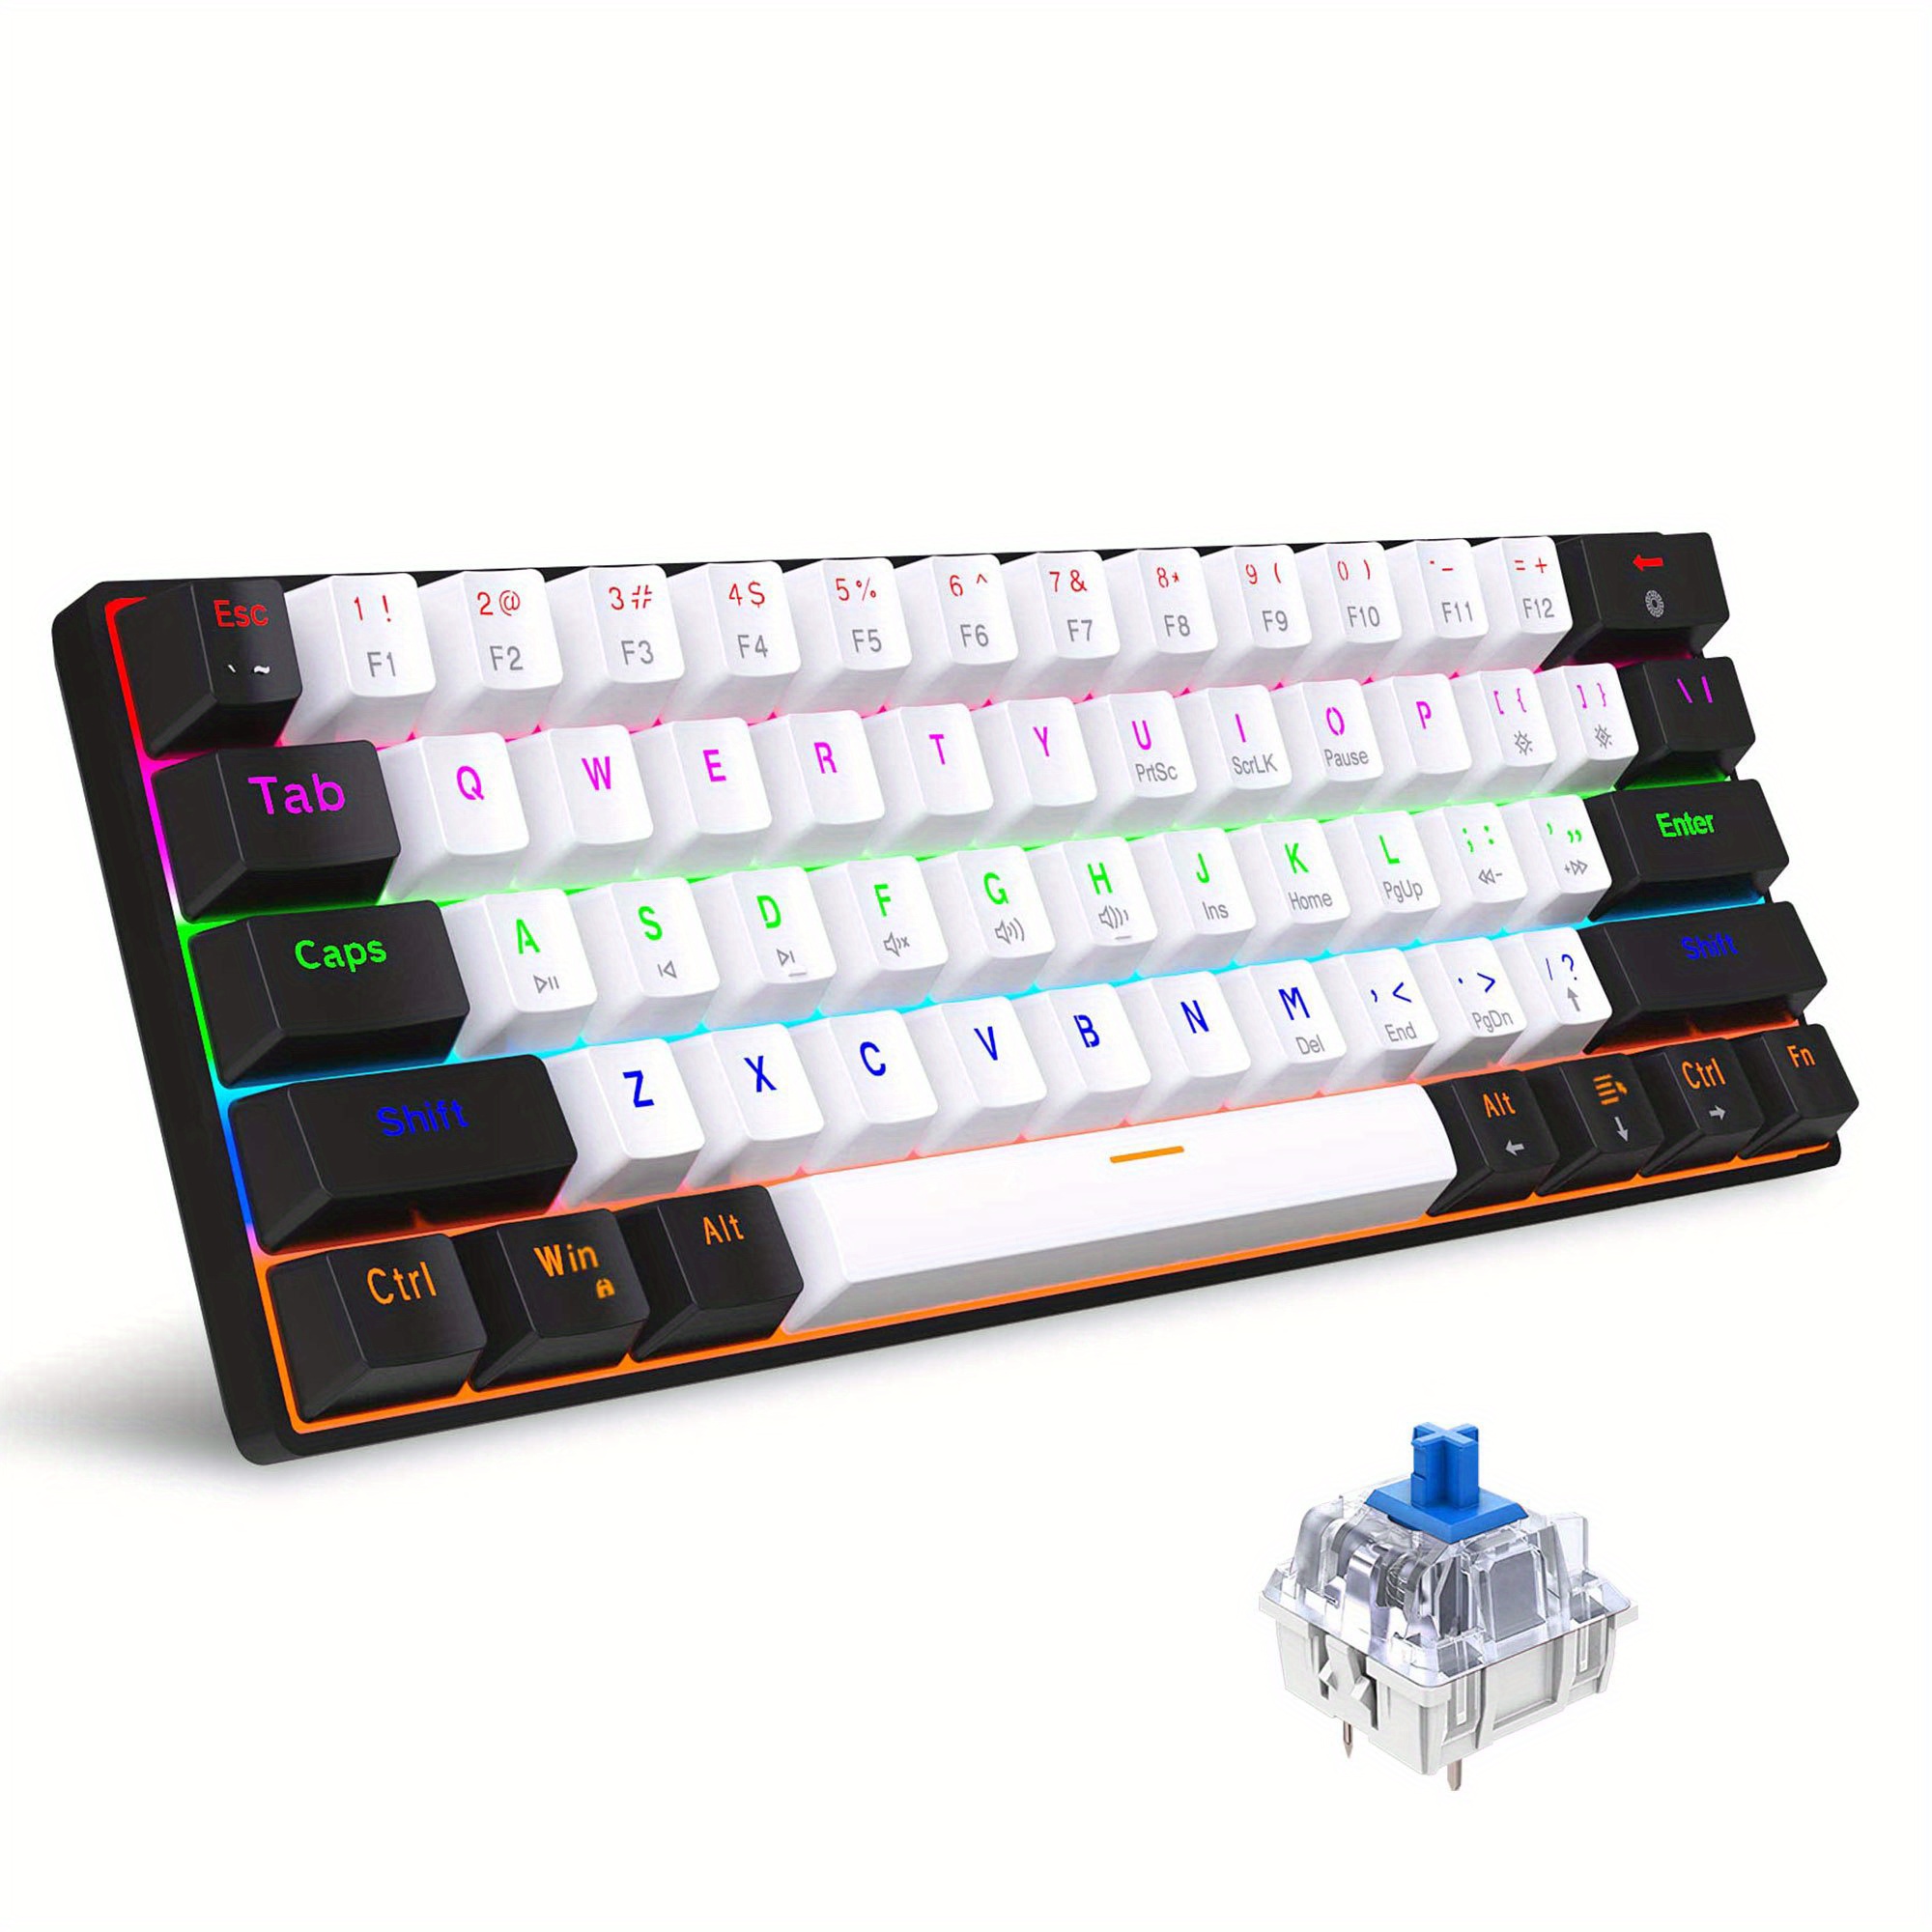 Kraken Pro 60 - BRED Edition 60% Mechanical Keyboard